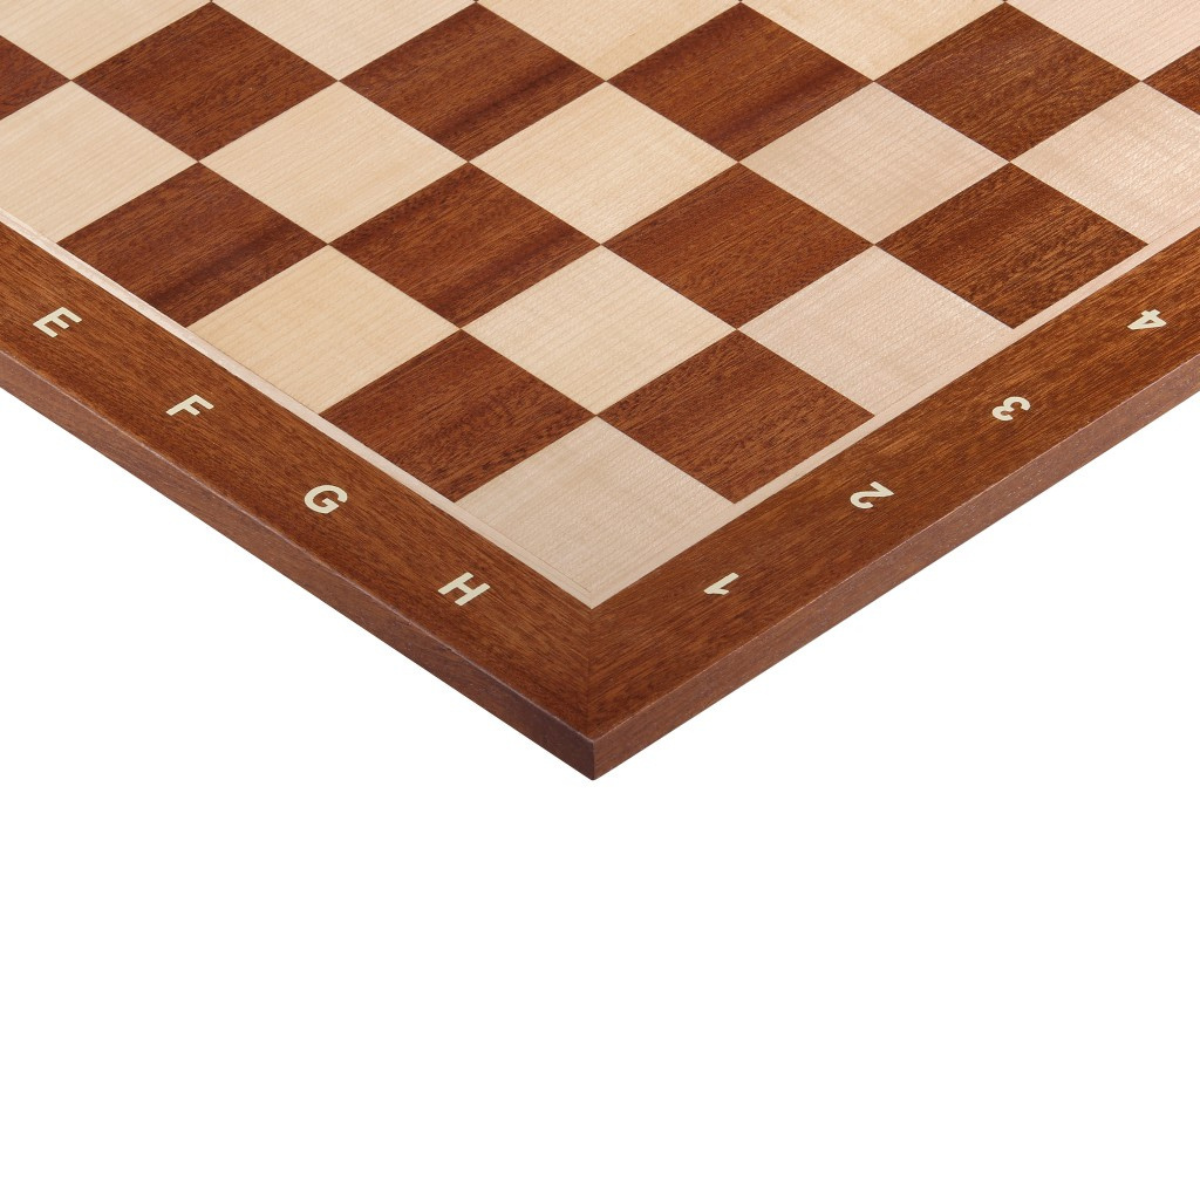 Schackbräde No. 4 CLASSICAL